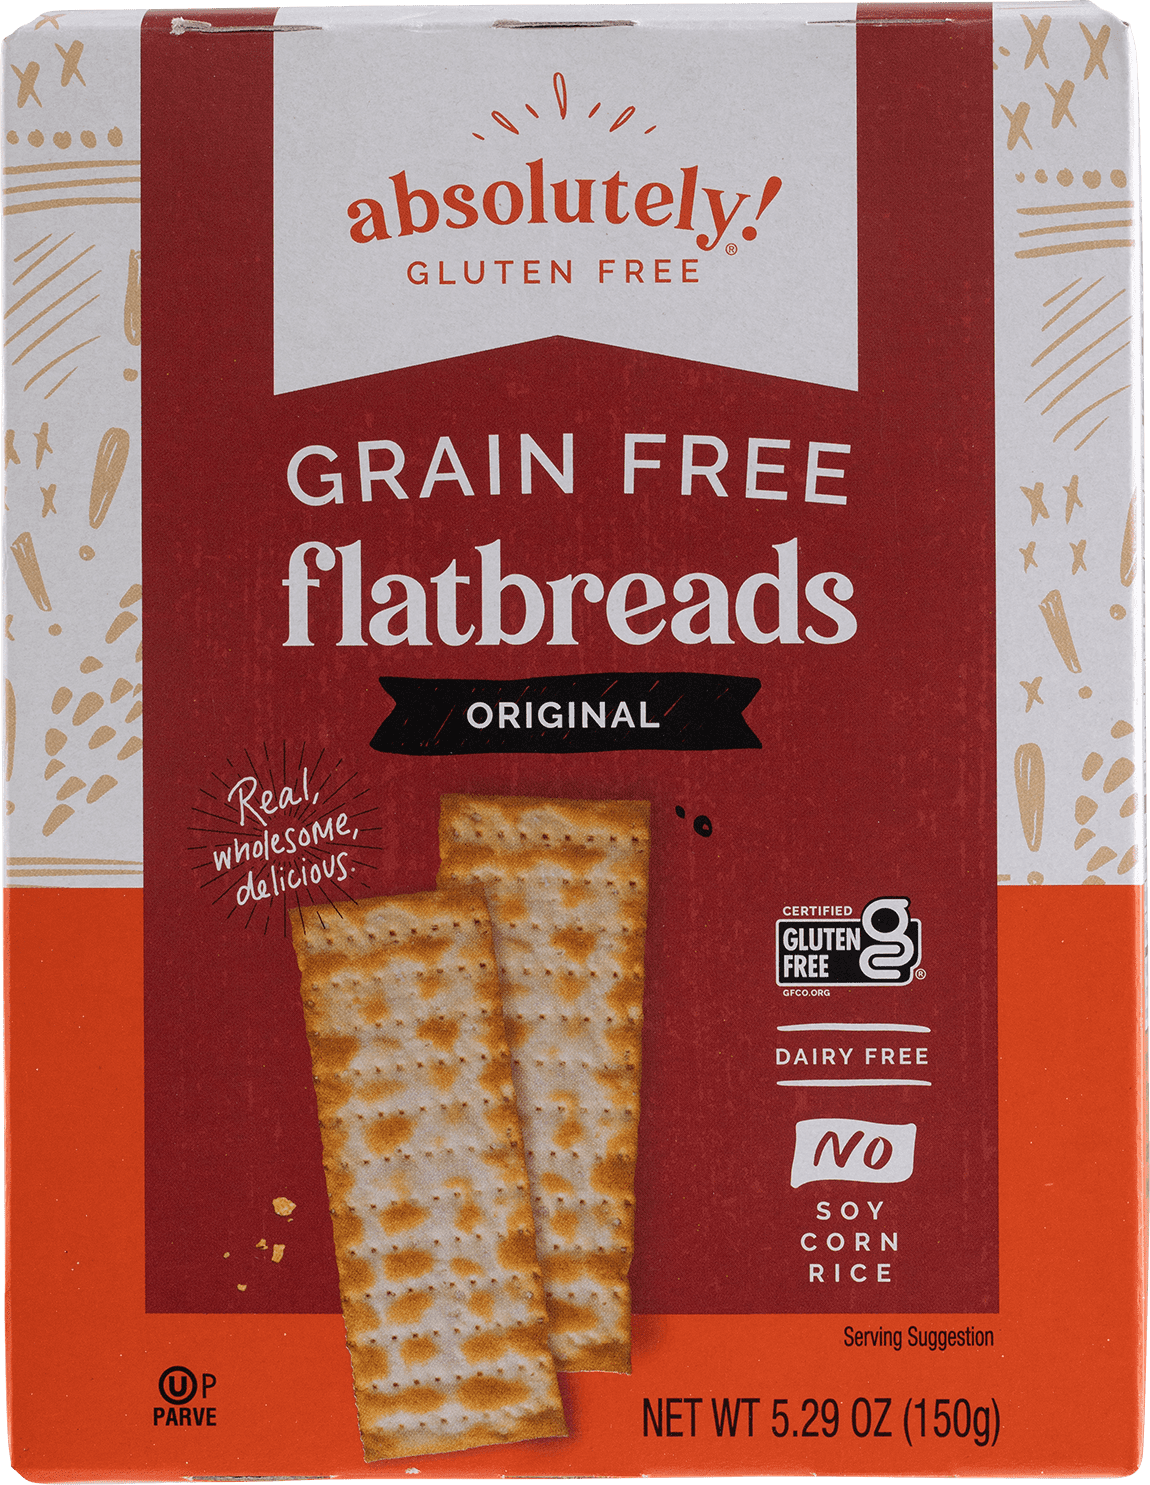 Absolutely Gluten Free Flatbread, Original, 5.29 oz Bag